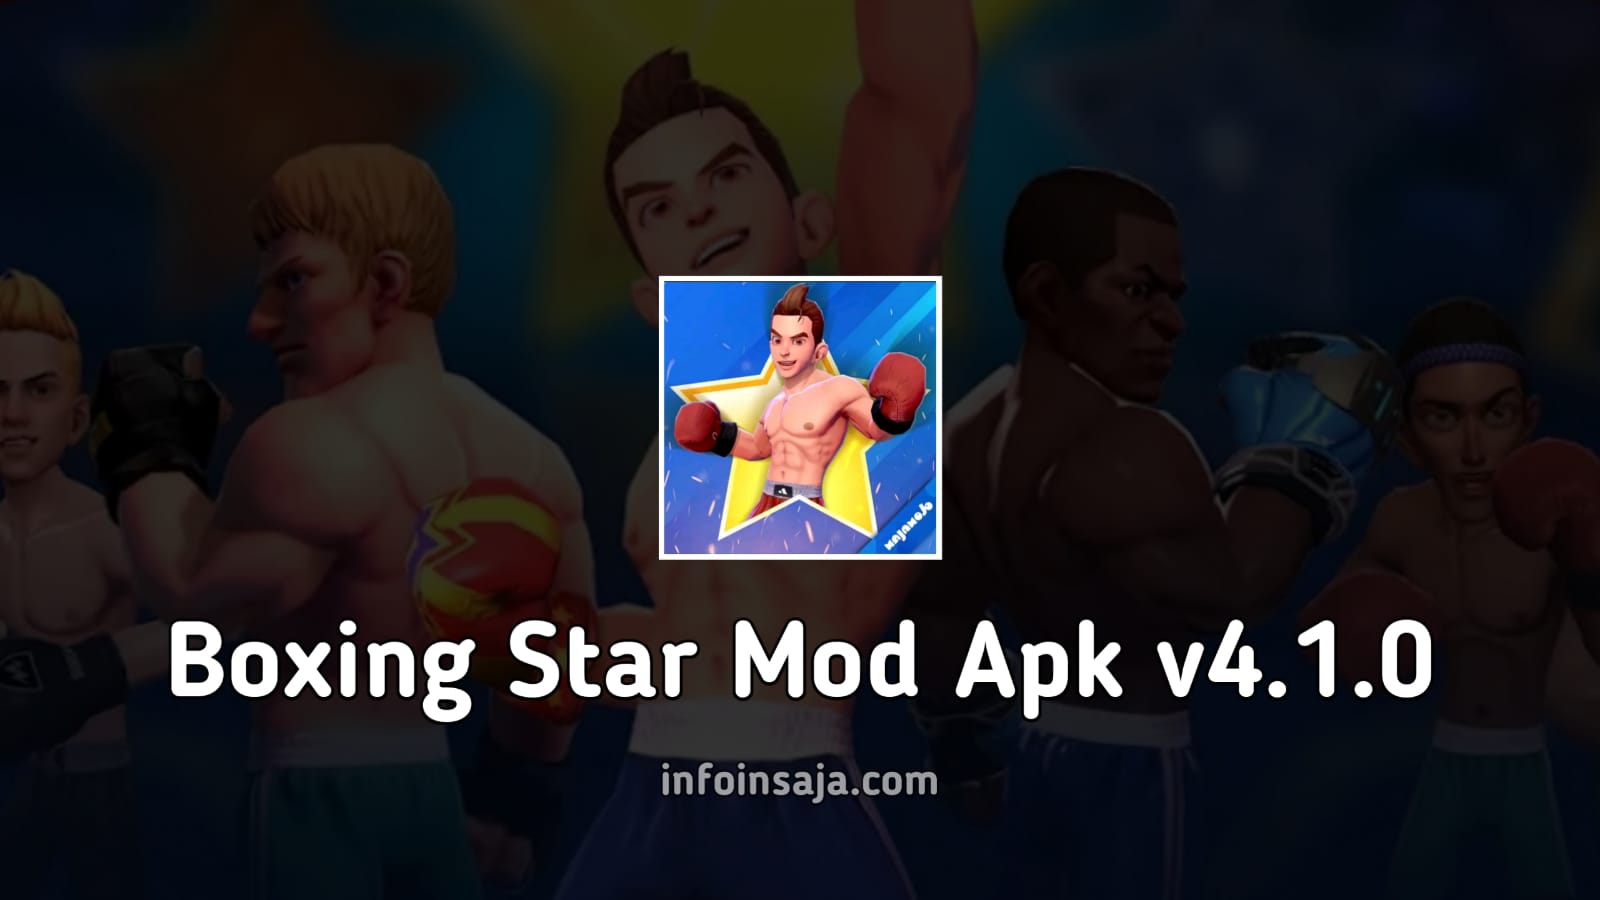 Boxing Star Mod Apk 4.1.0